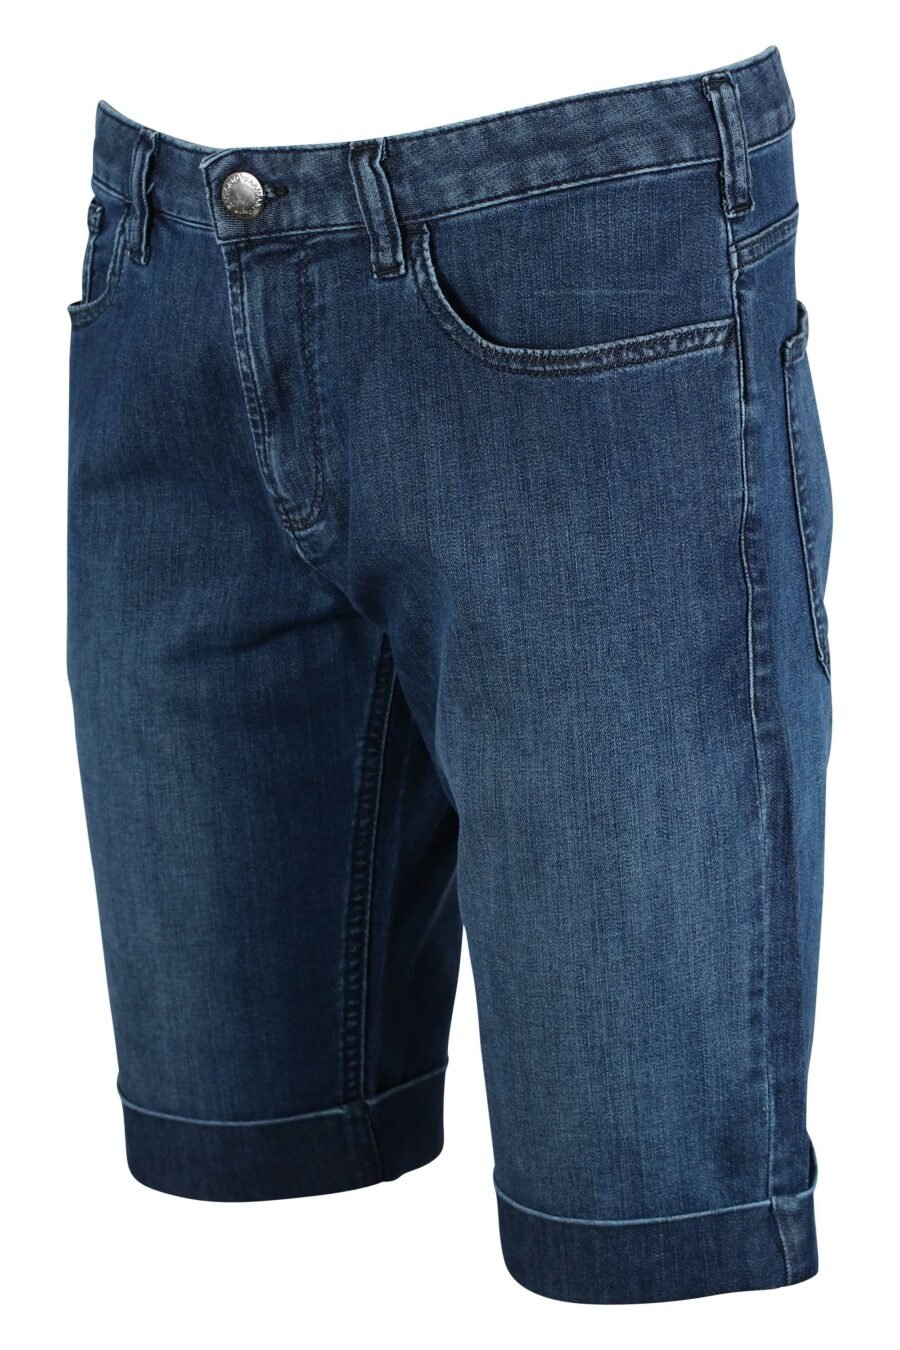 Blue denim shorts with metal mini logo - IMG 9494